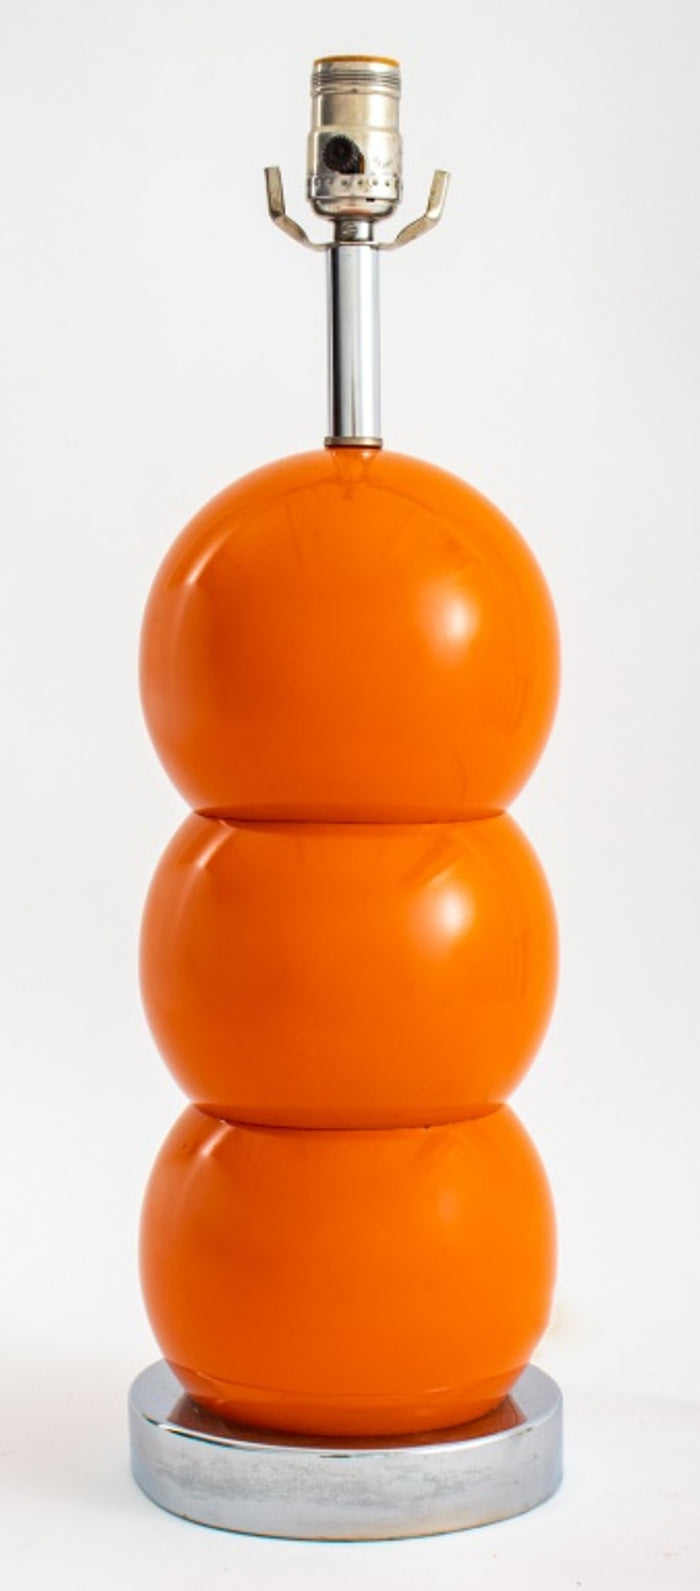 Mod Orange Sacked Ball Table Lamp, 1970s